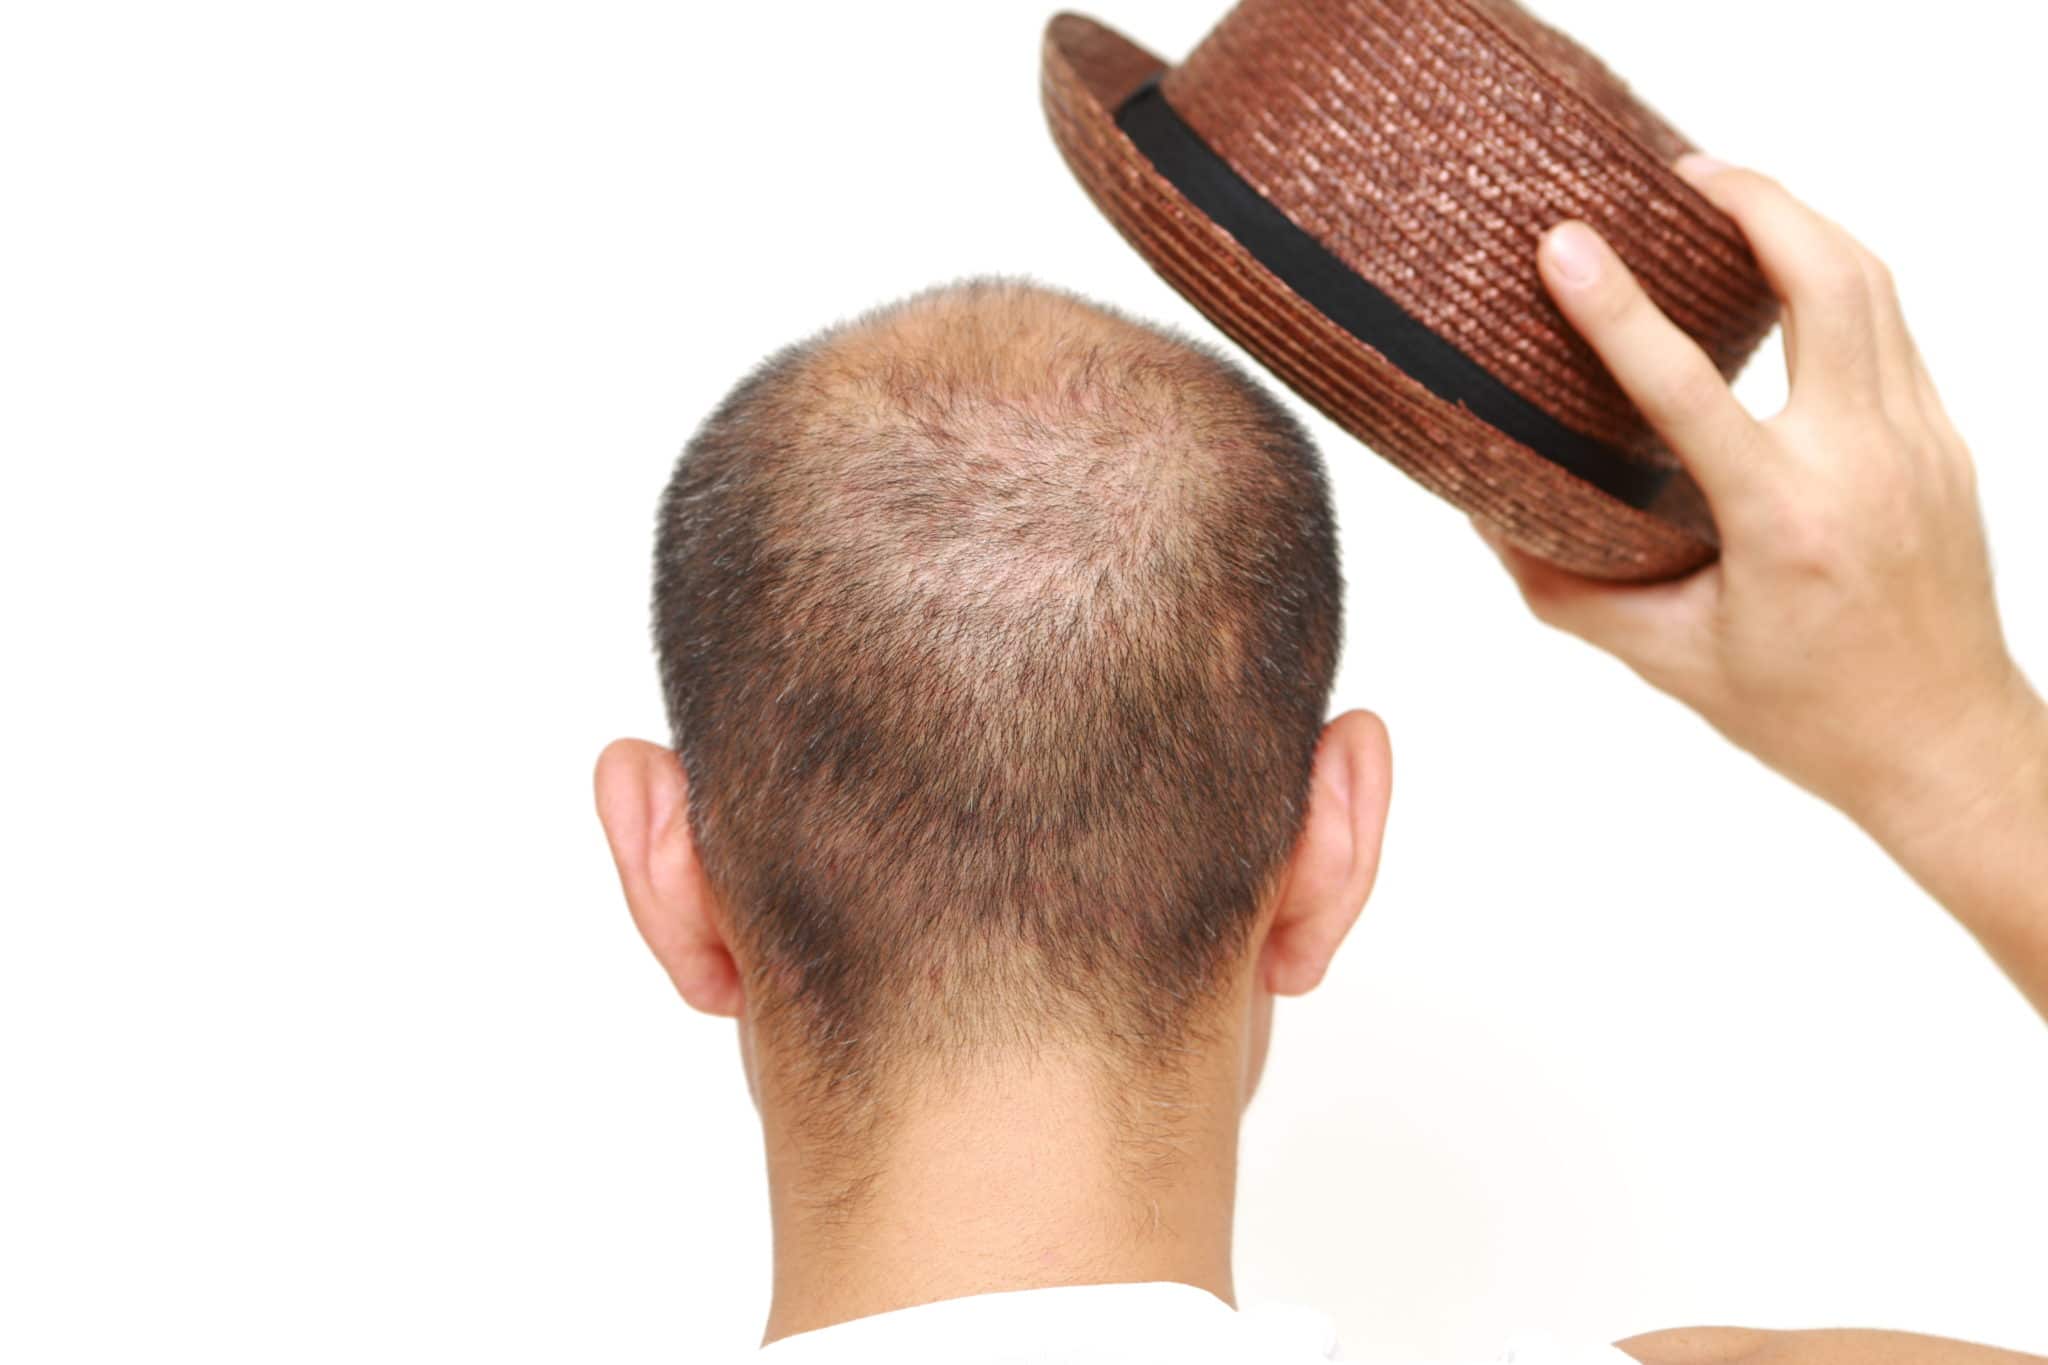 Do hats cause hair loss?